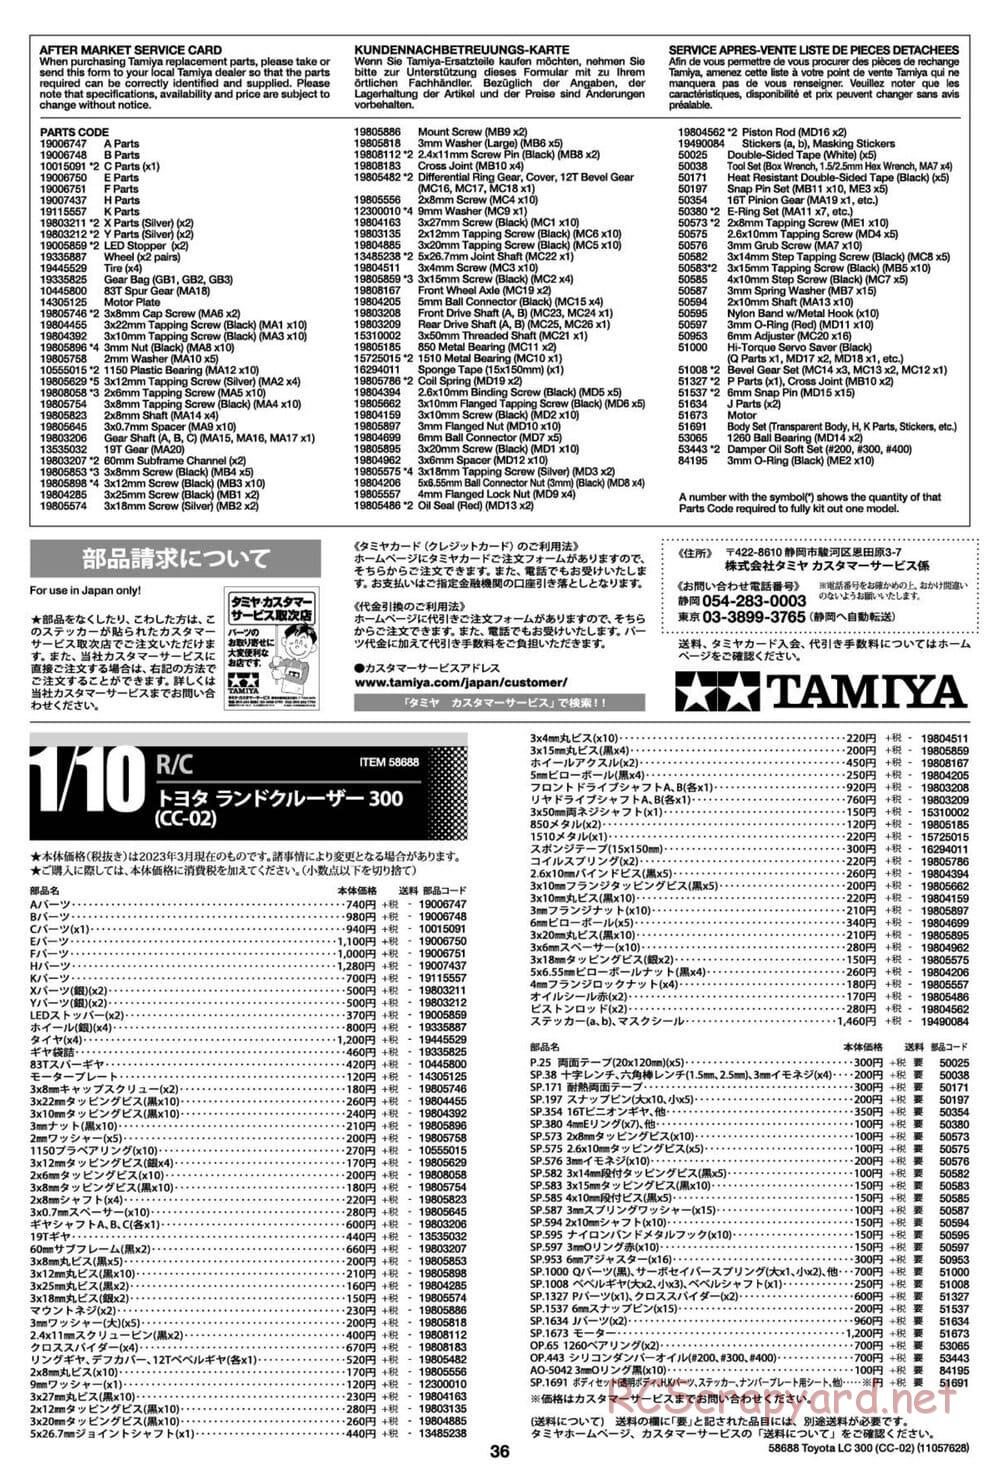 Tamiya - Toyota Land Cruiser 300 - CC-02 Chassis - Manual - Page 36